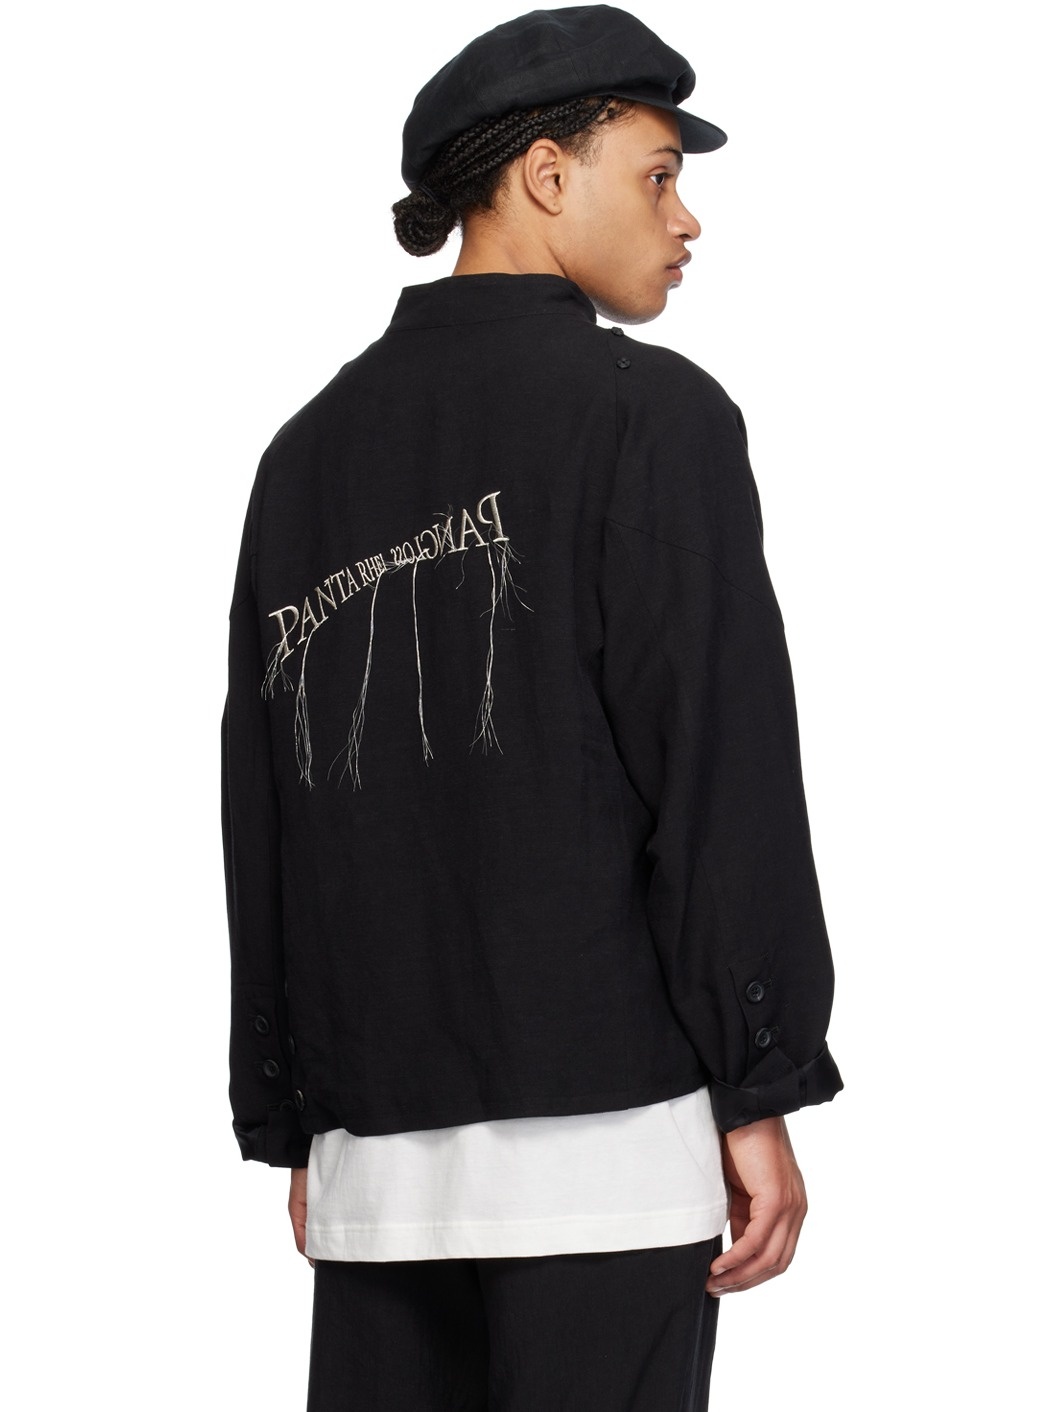 Black Embroidered Jacket - 3